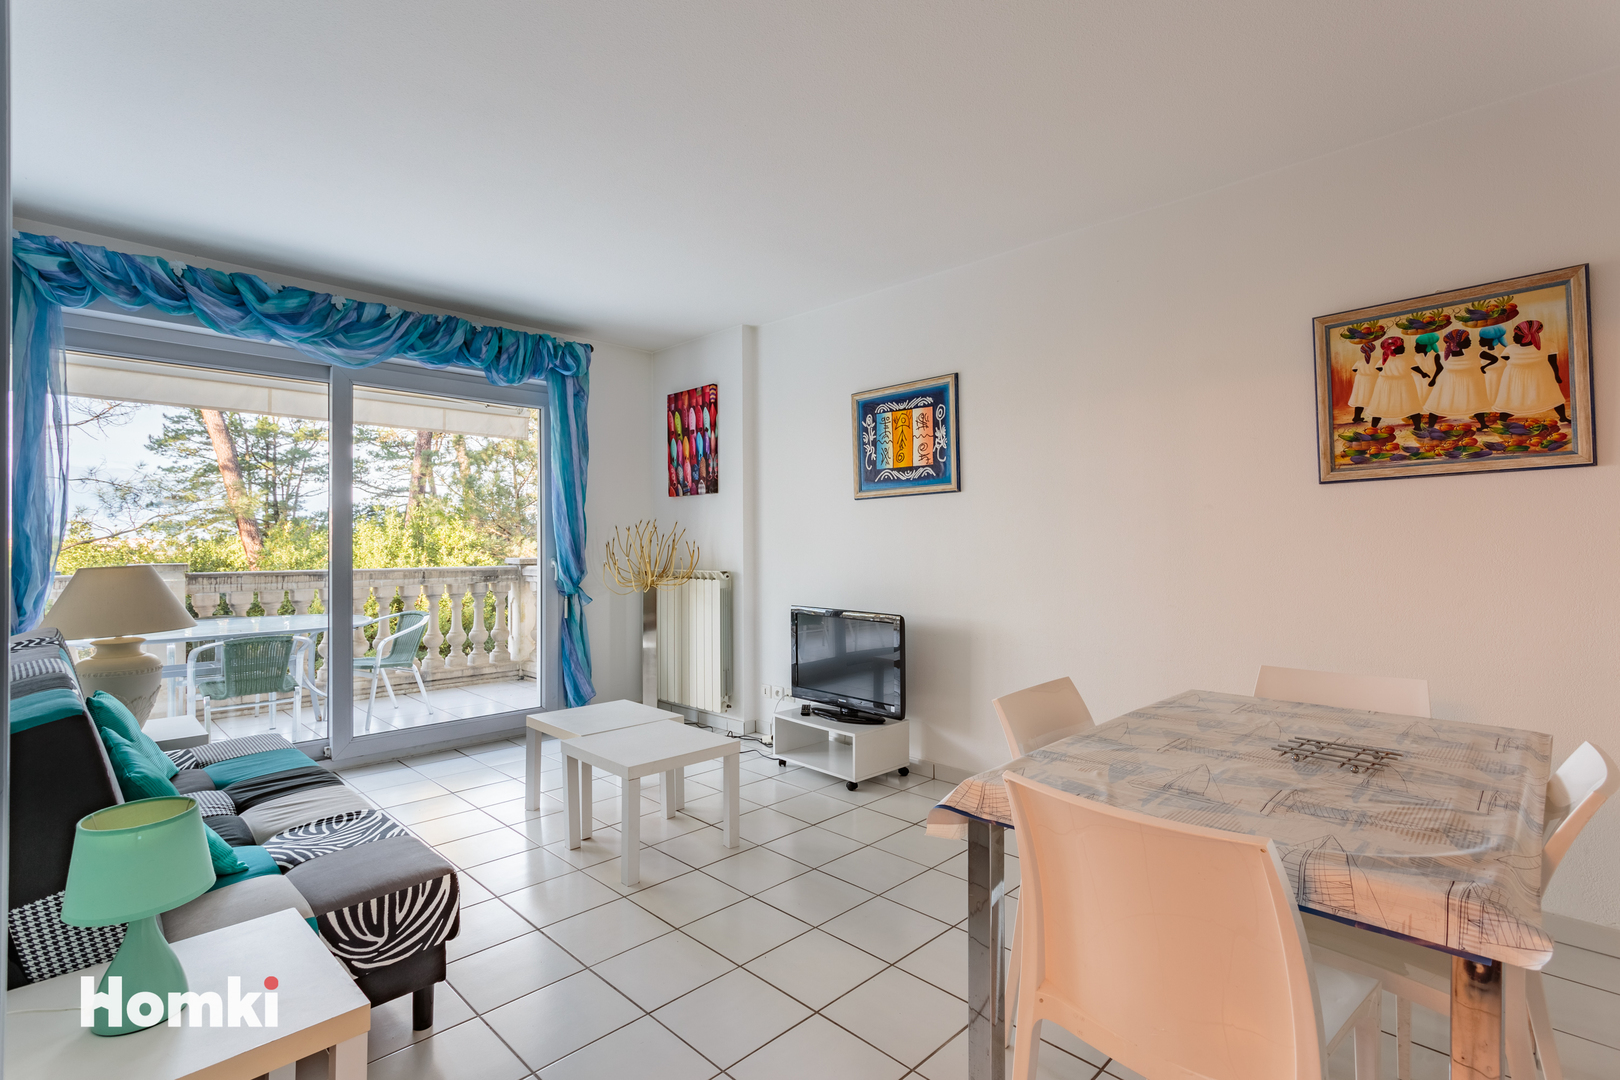 Homki - Vente Appartement  de 48.0 m² à Biarritz 64200